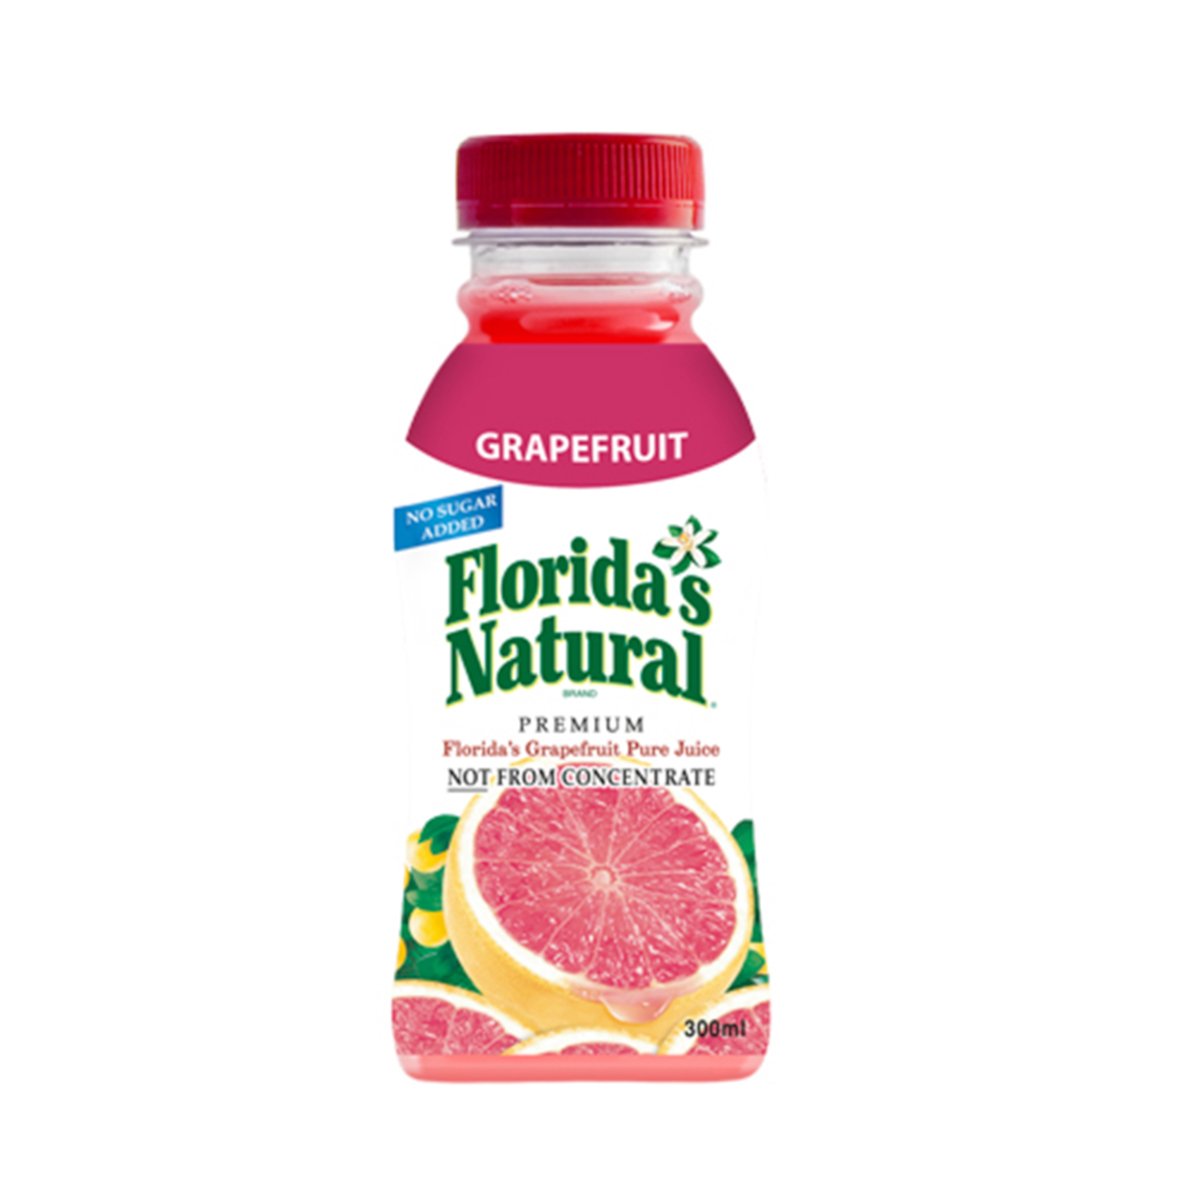 Florida's Natural Premium Grapefruit Juice 300 ml